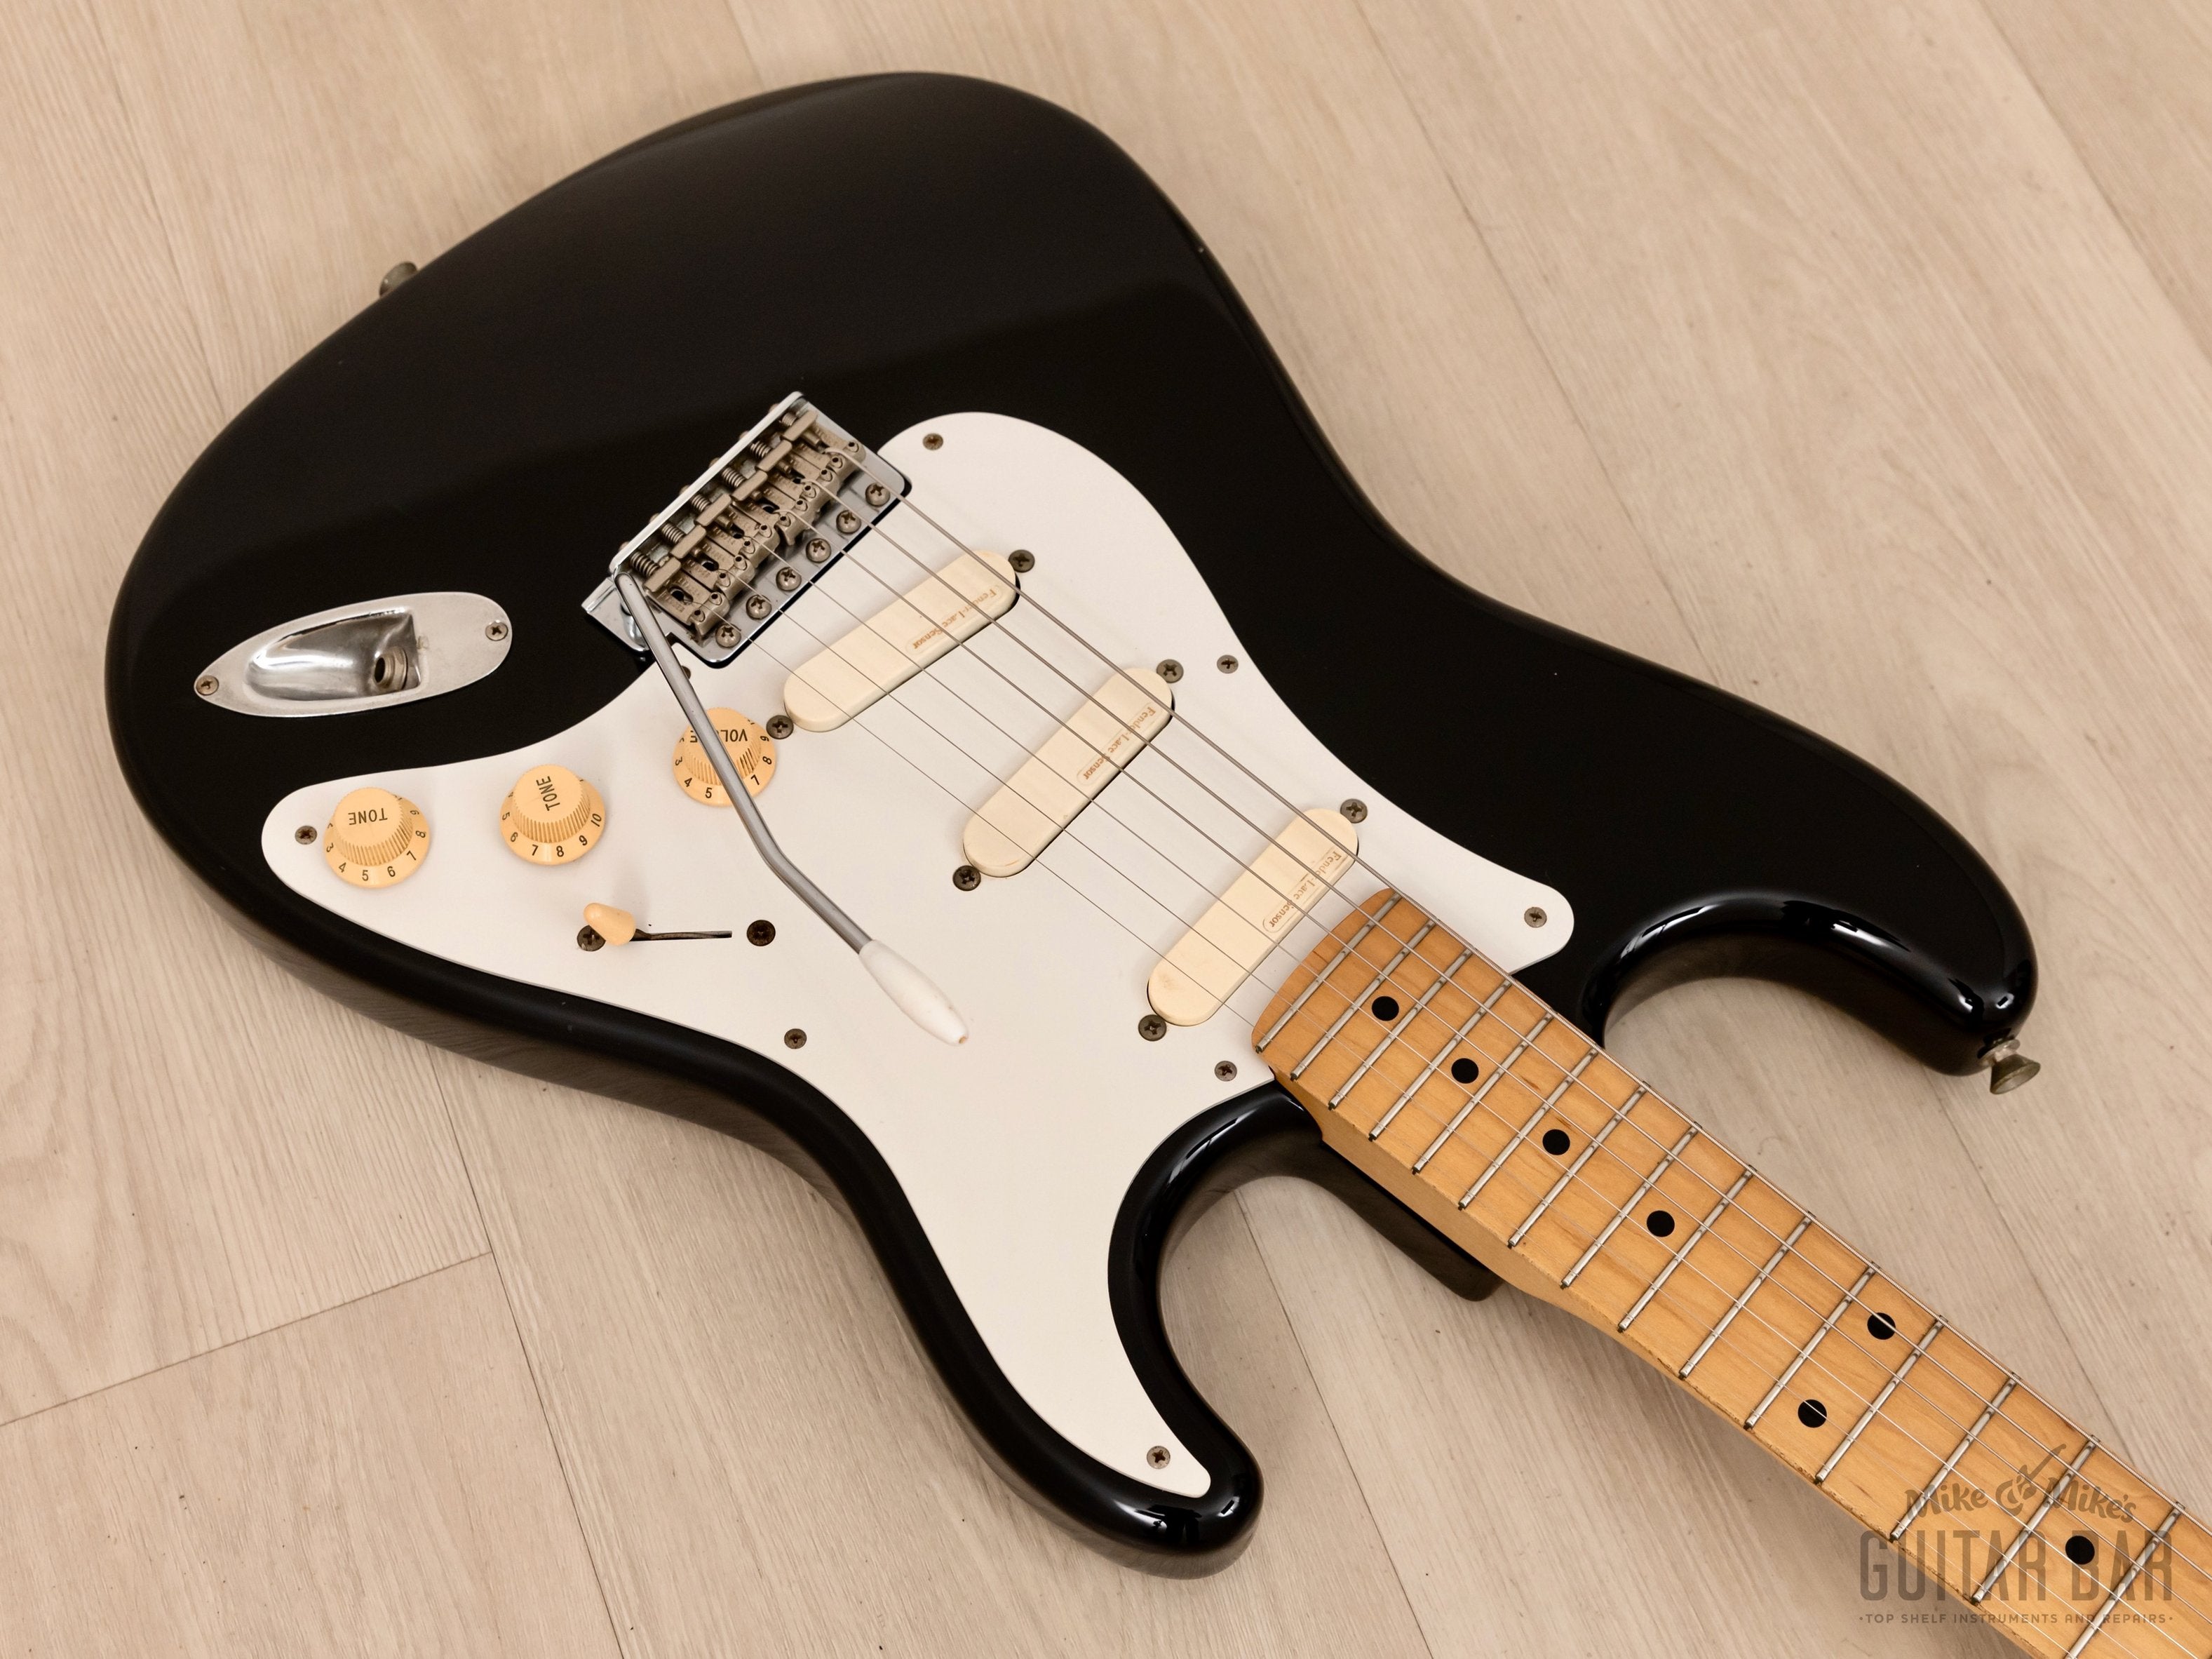 1999 Fender Stratocaster ‘54 Vintage Reissue ST54-95LS Blackie Specs w/ USA Lace Sensors, Japan CIJ